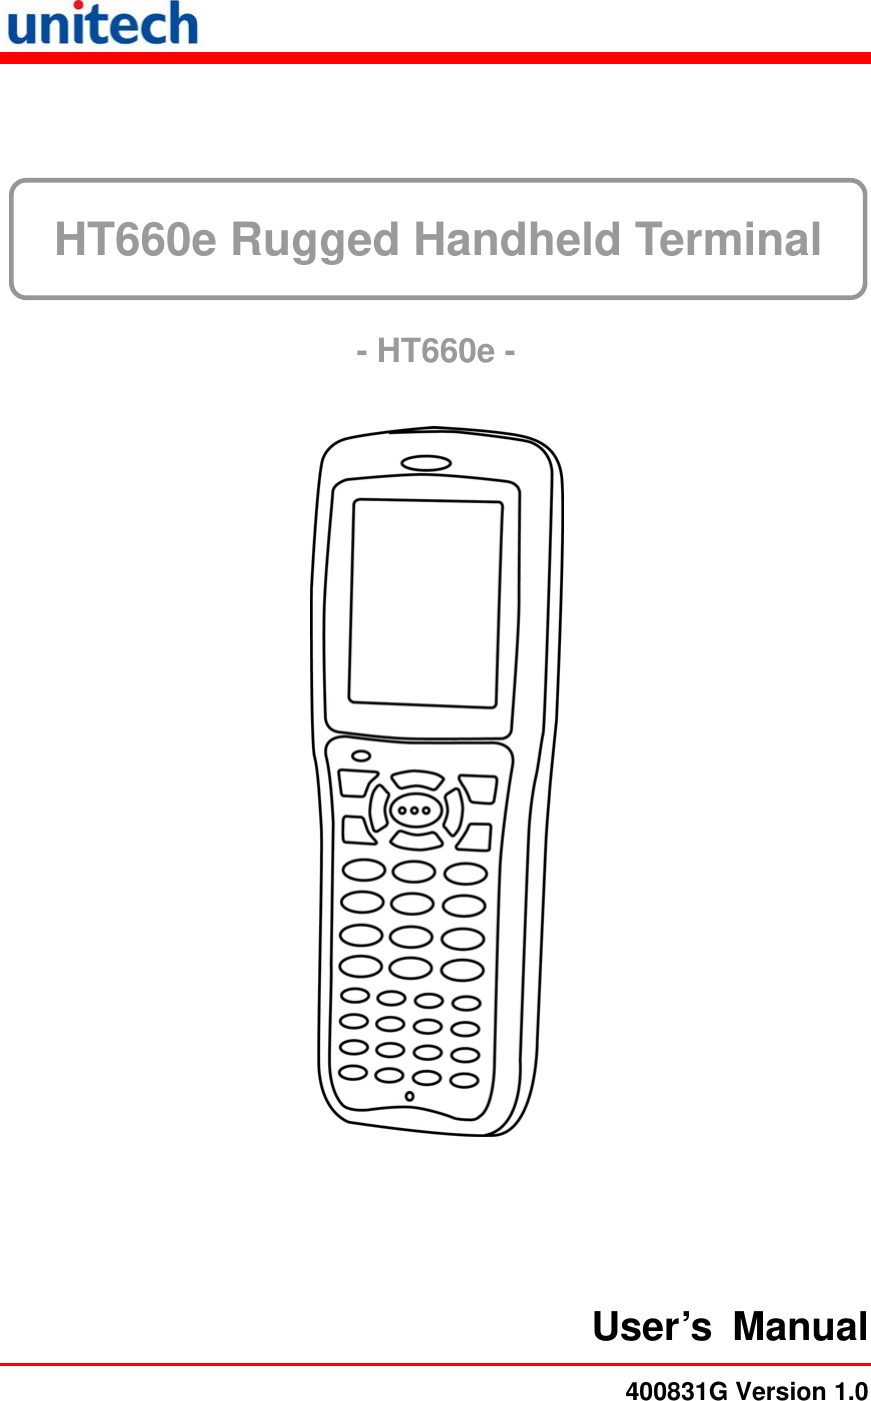      HT660e Rugged Handheld Terminal    - HT660e -  User’s Manual400831G Version 1.0 